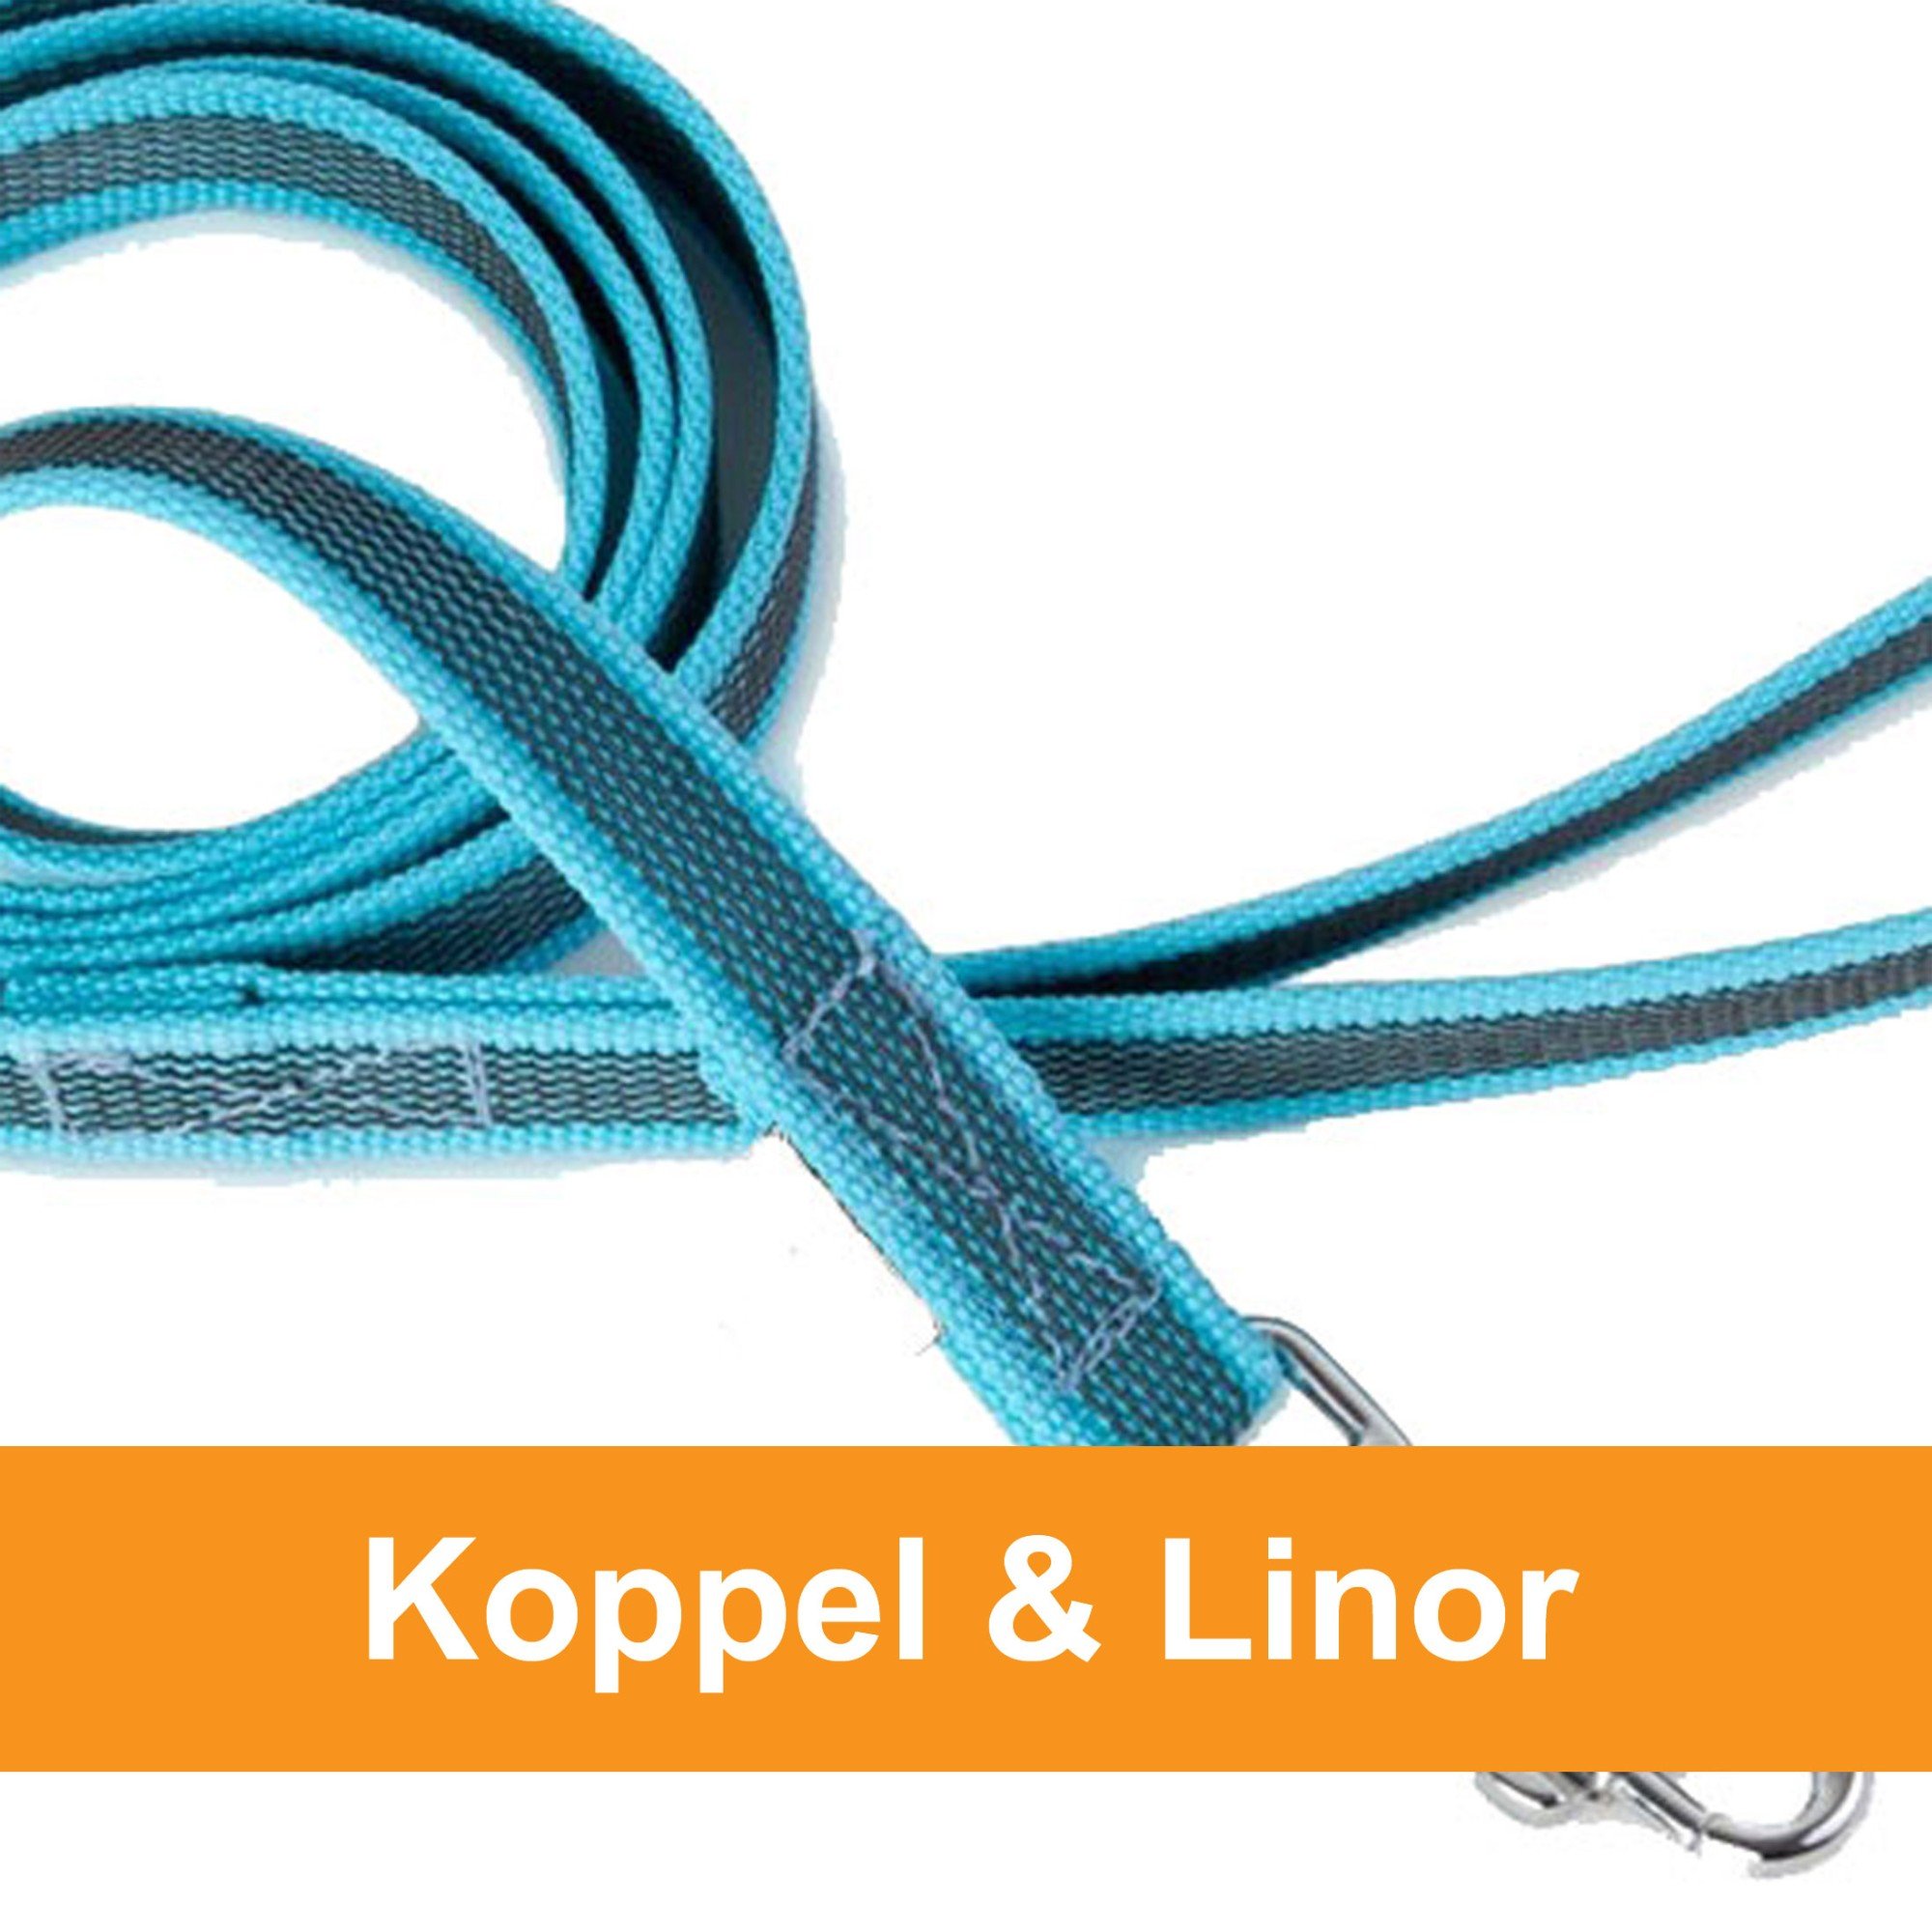 Koppel & Linor - MACH 4 Dogs